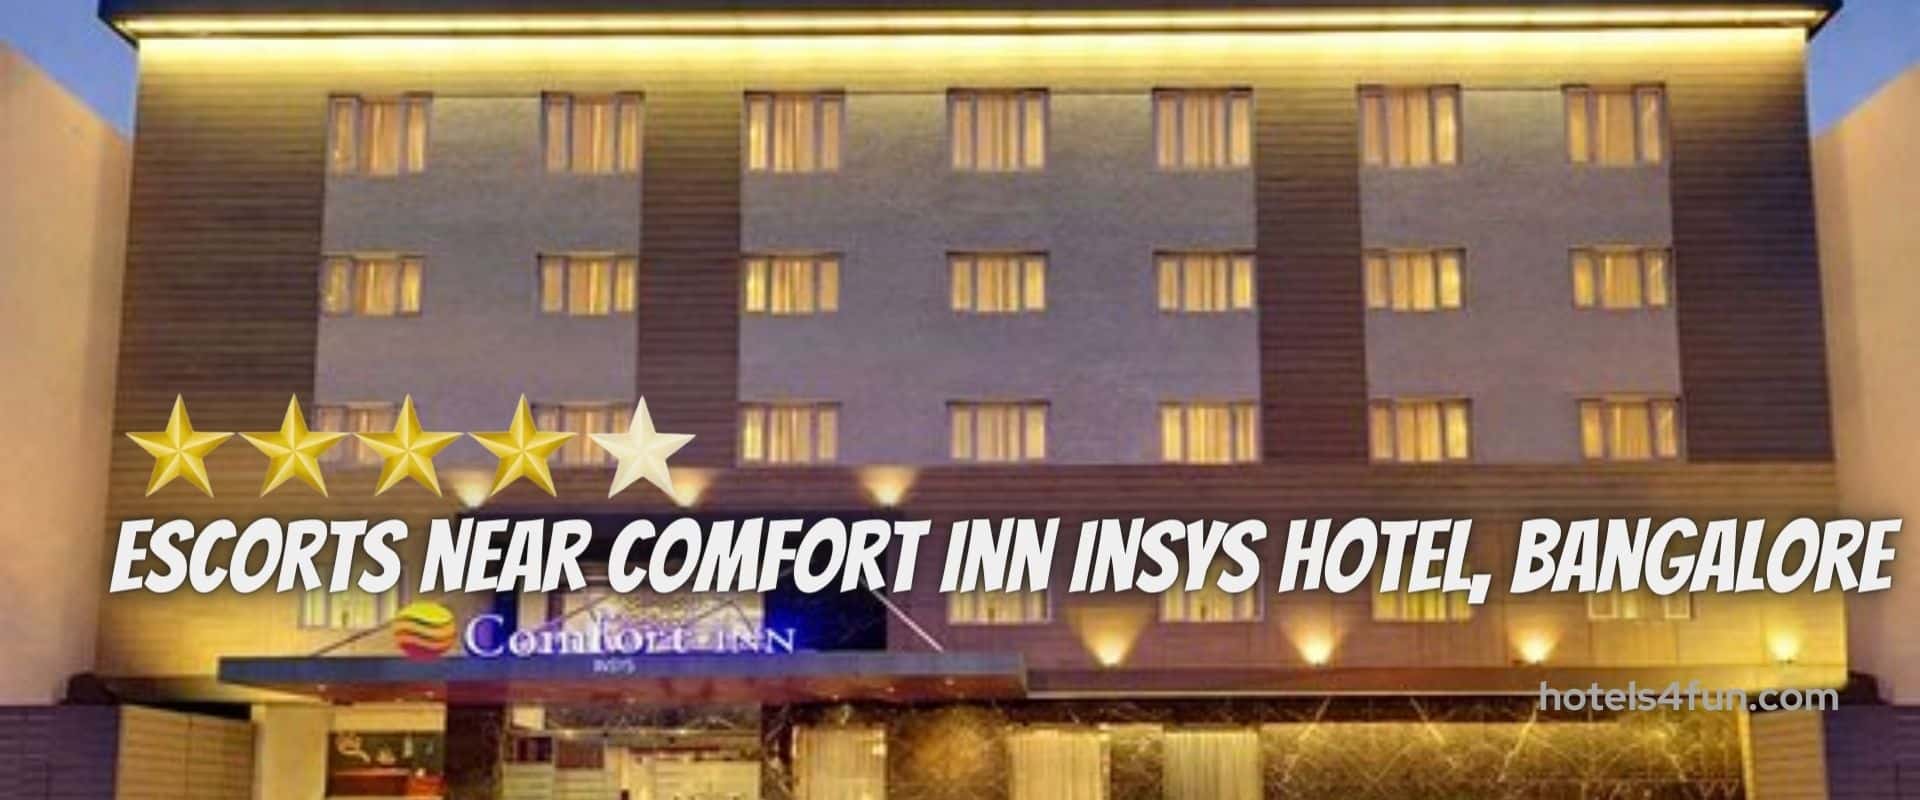 Comfort INN Insys Hotel Bangalore